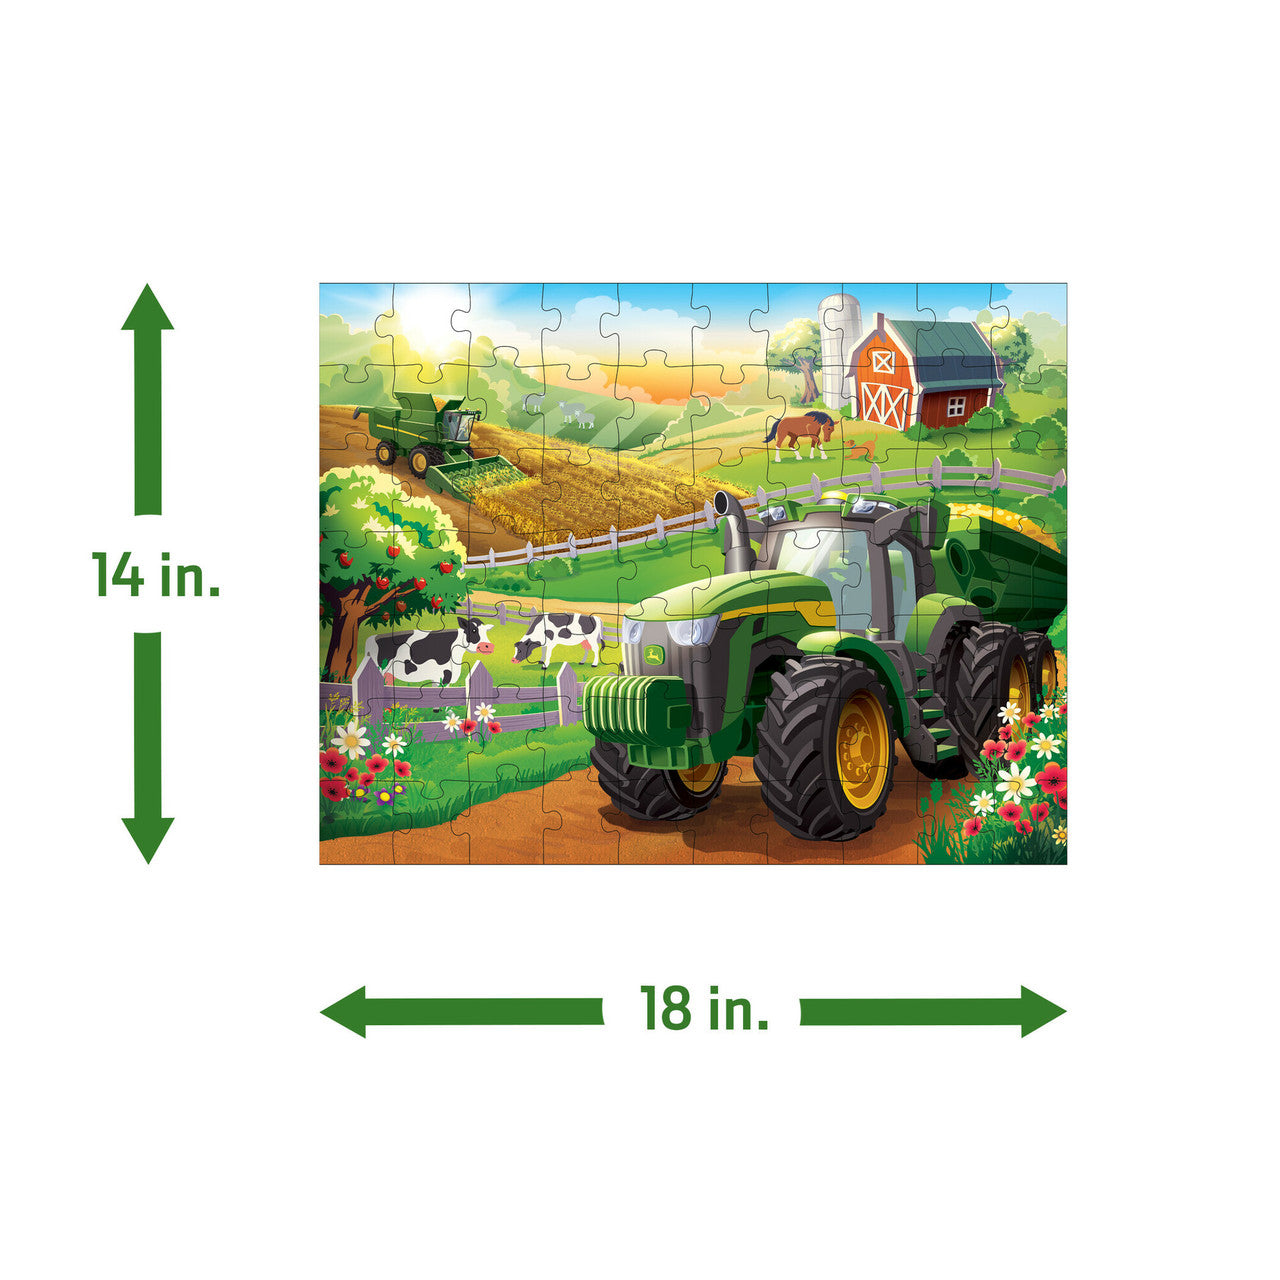 Fleece John Deere Logos Green Tractors Farmer Farming Farmland Country Fleece  Fabric Print by the Yard (